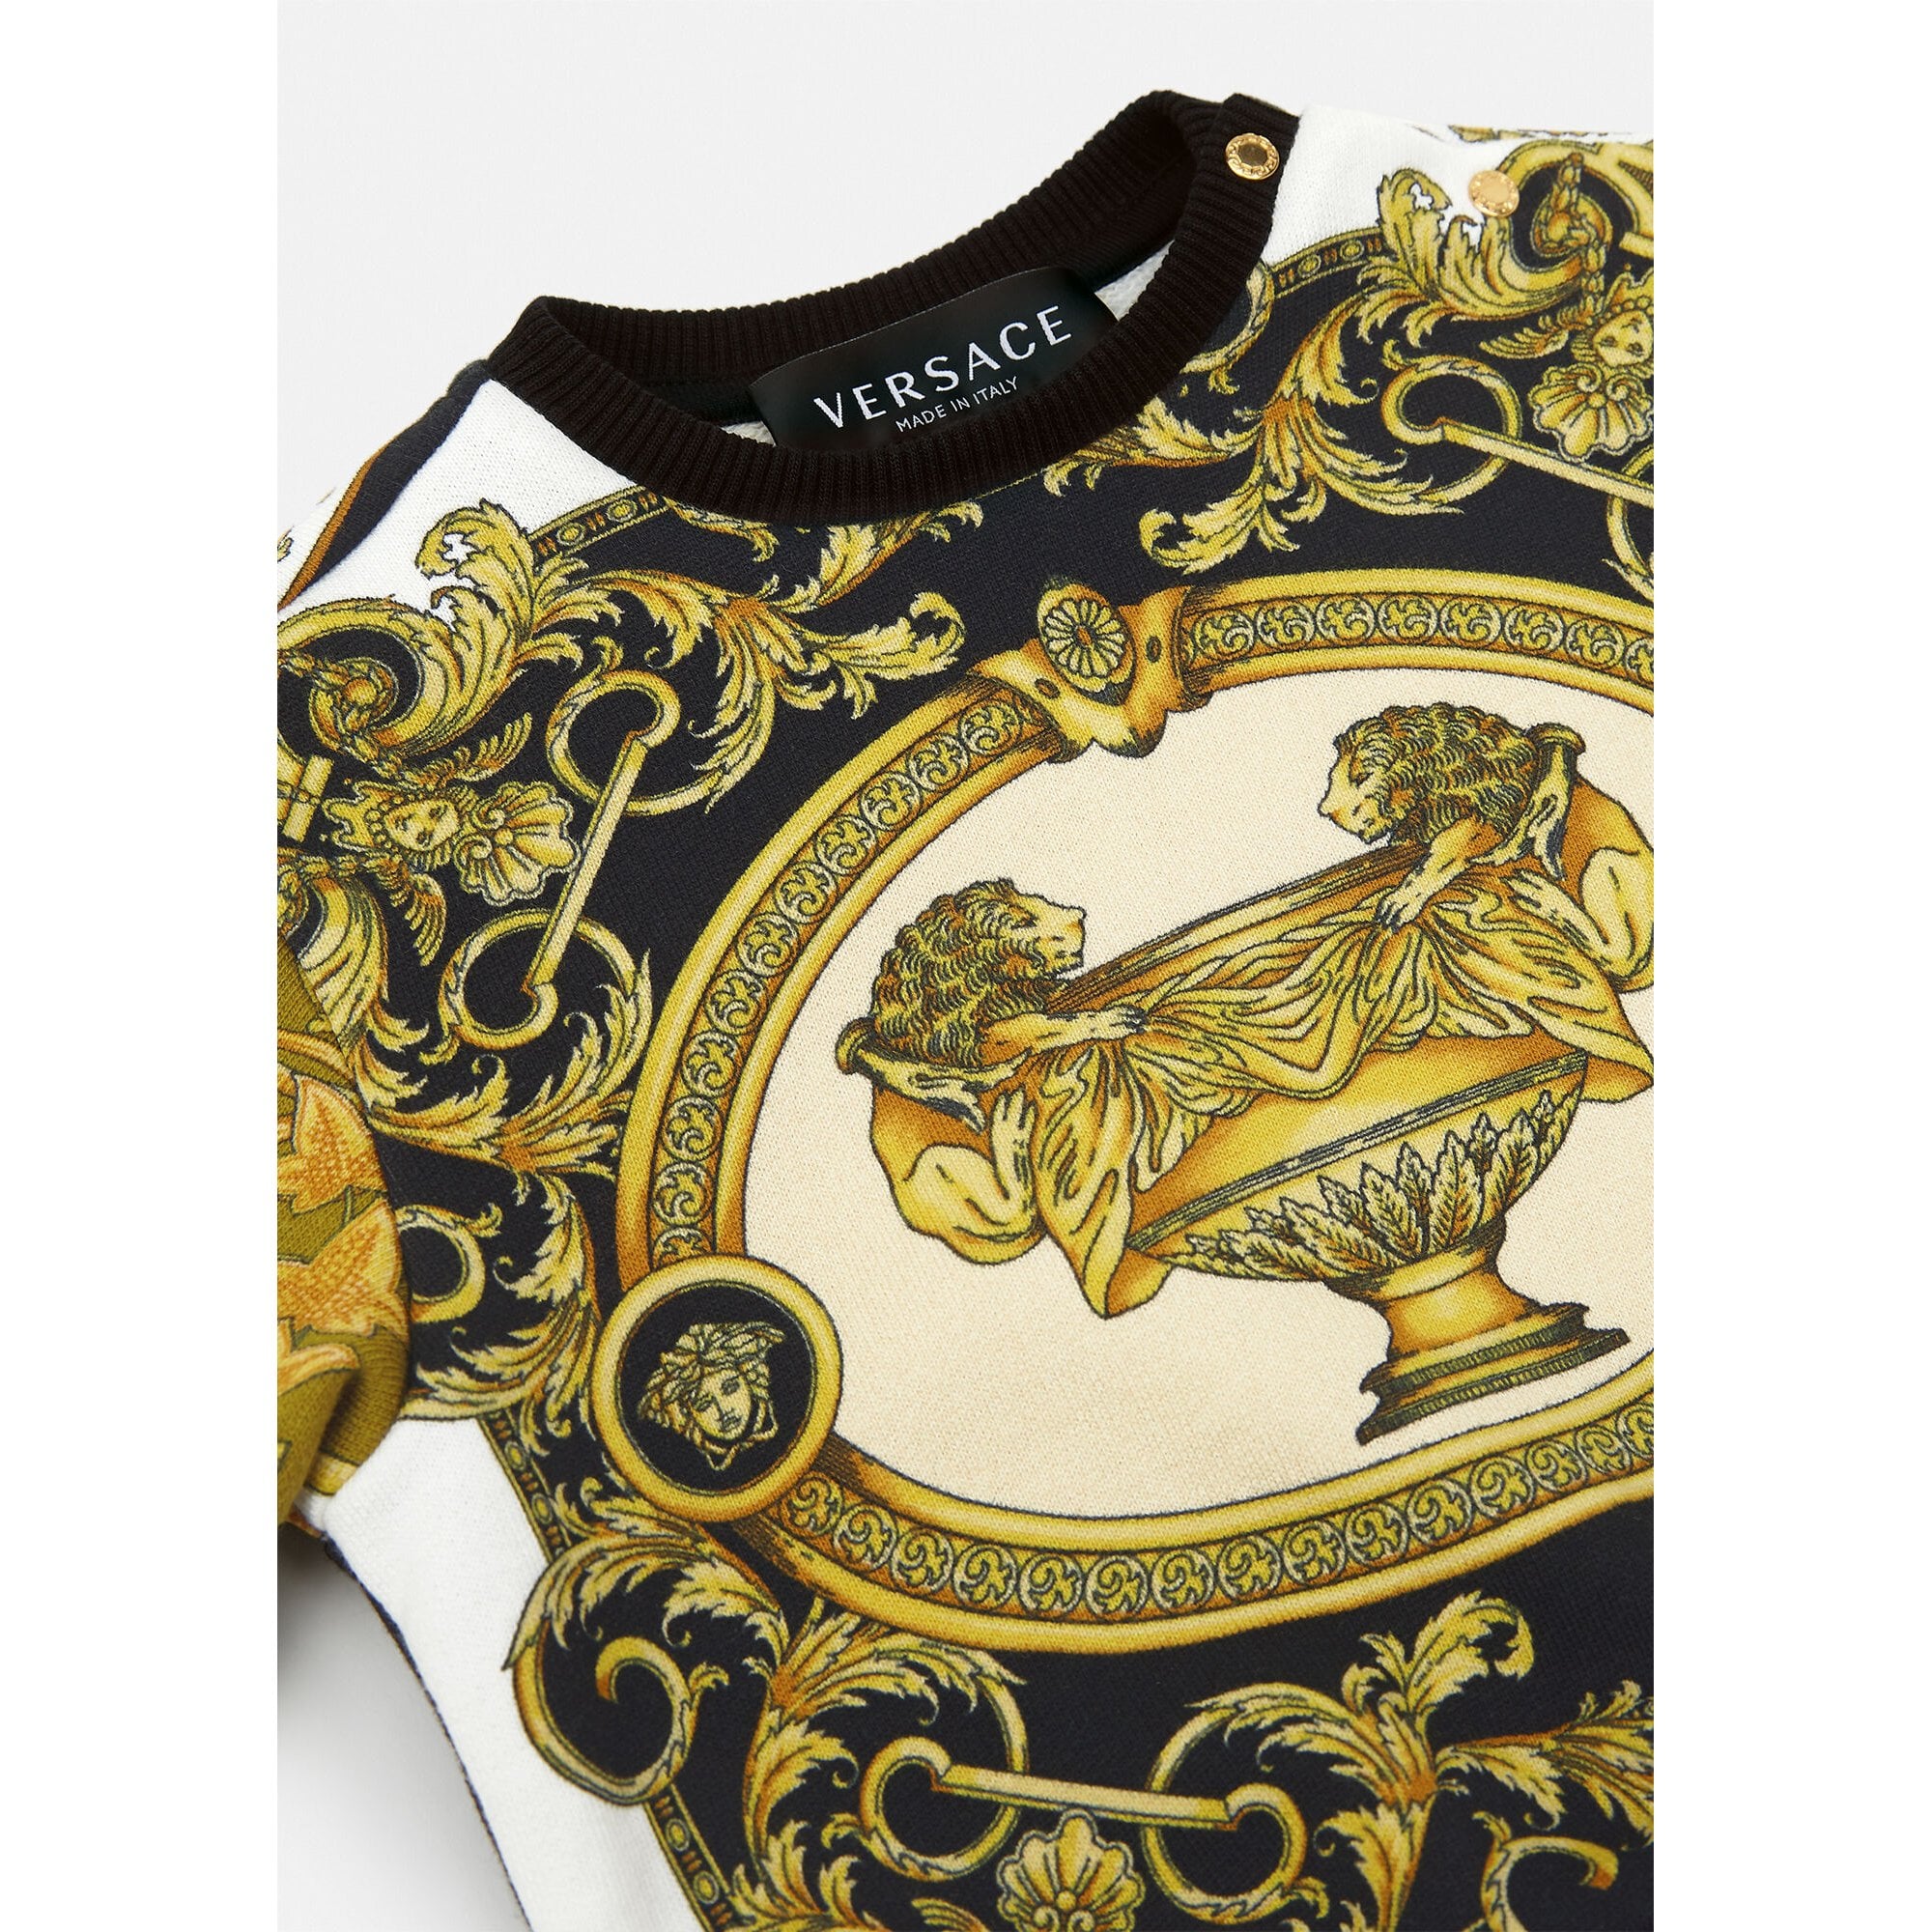 Versace Boys Mixed Print Sweatshirt Multi-coloured 24M